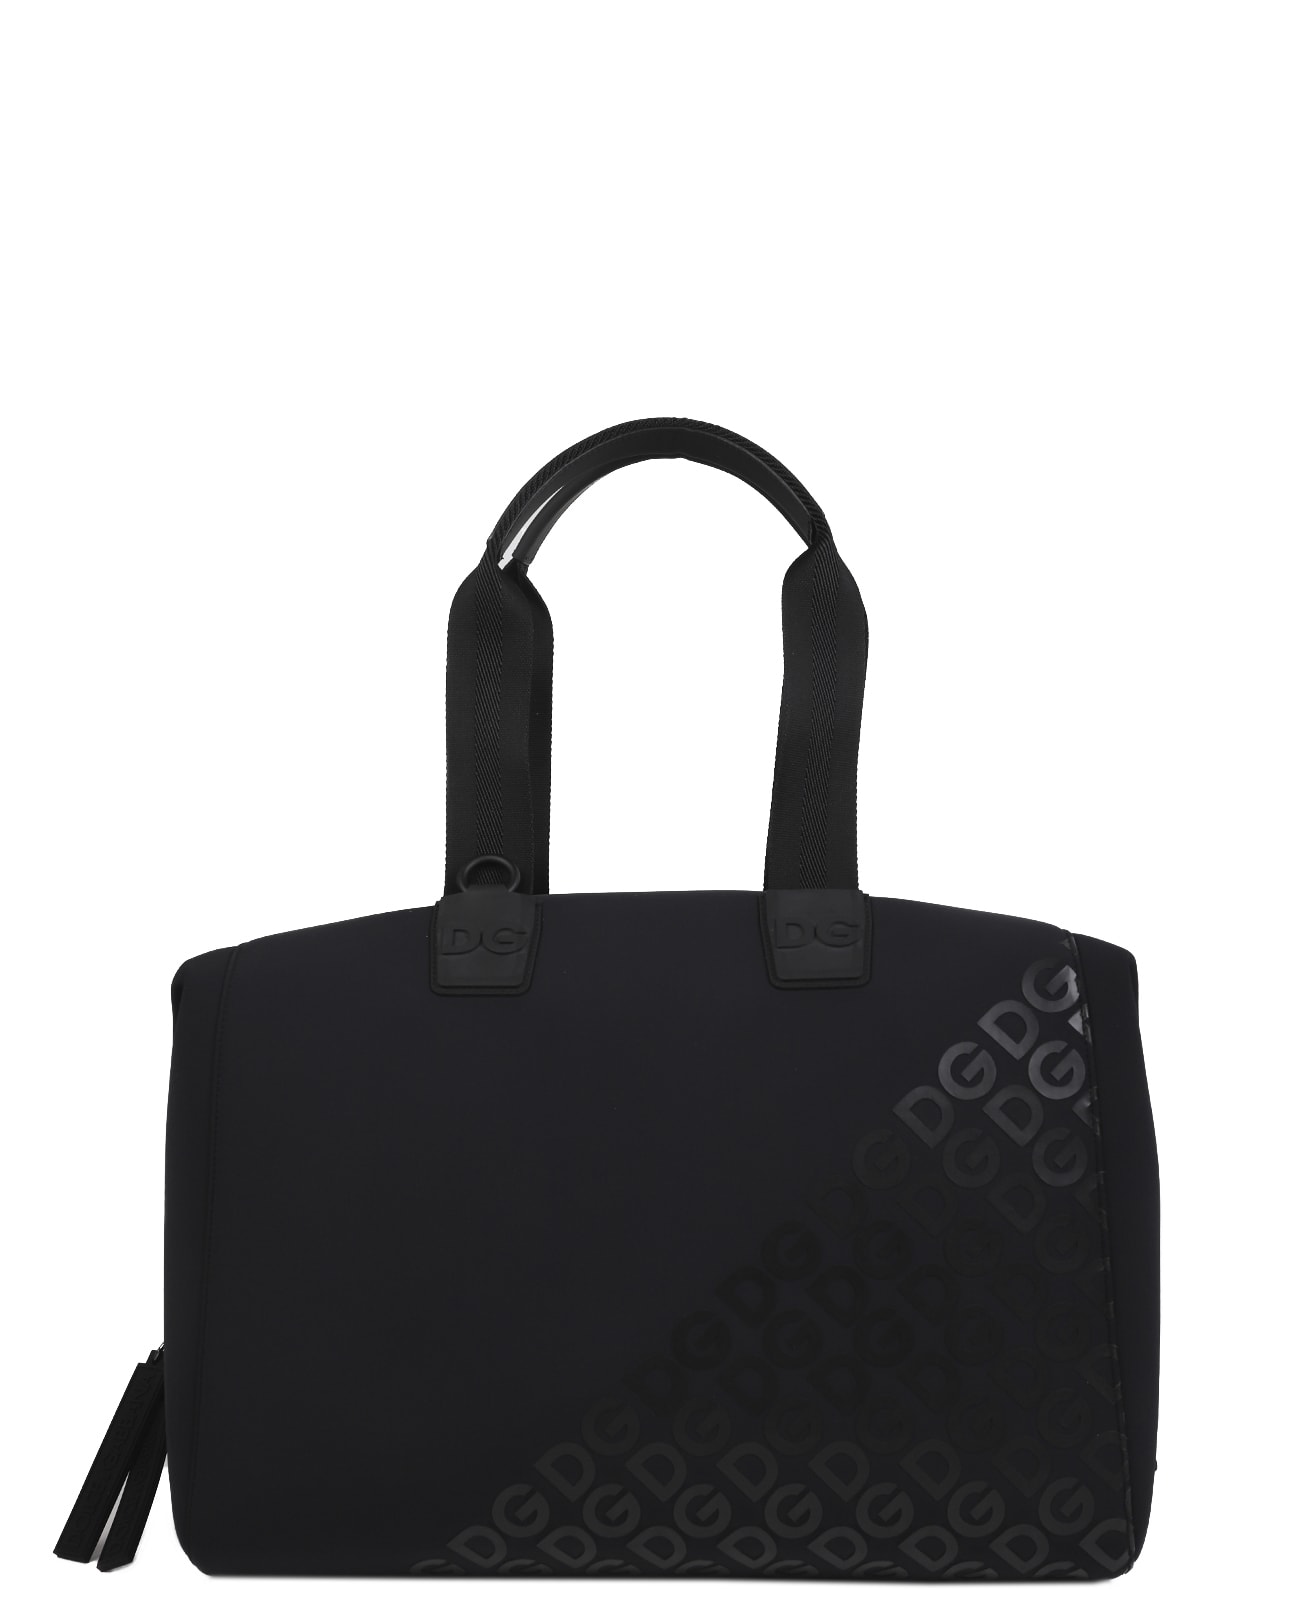 Dolce & Gabbana Black Neoprene Millennials Bag